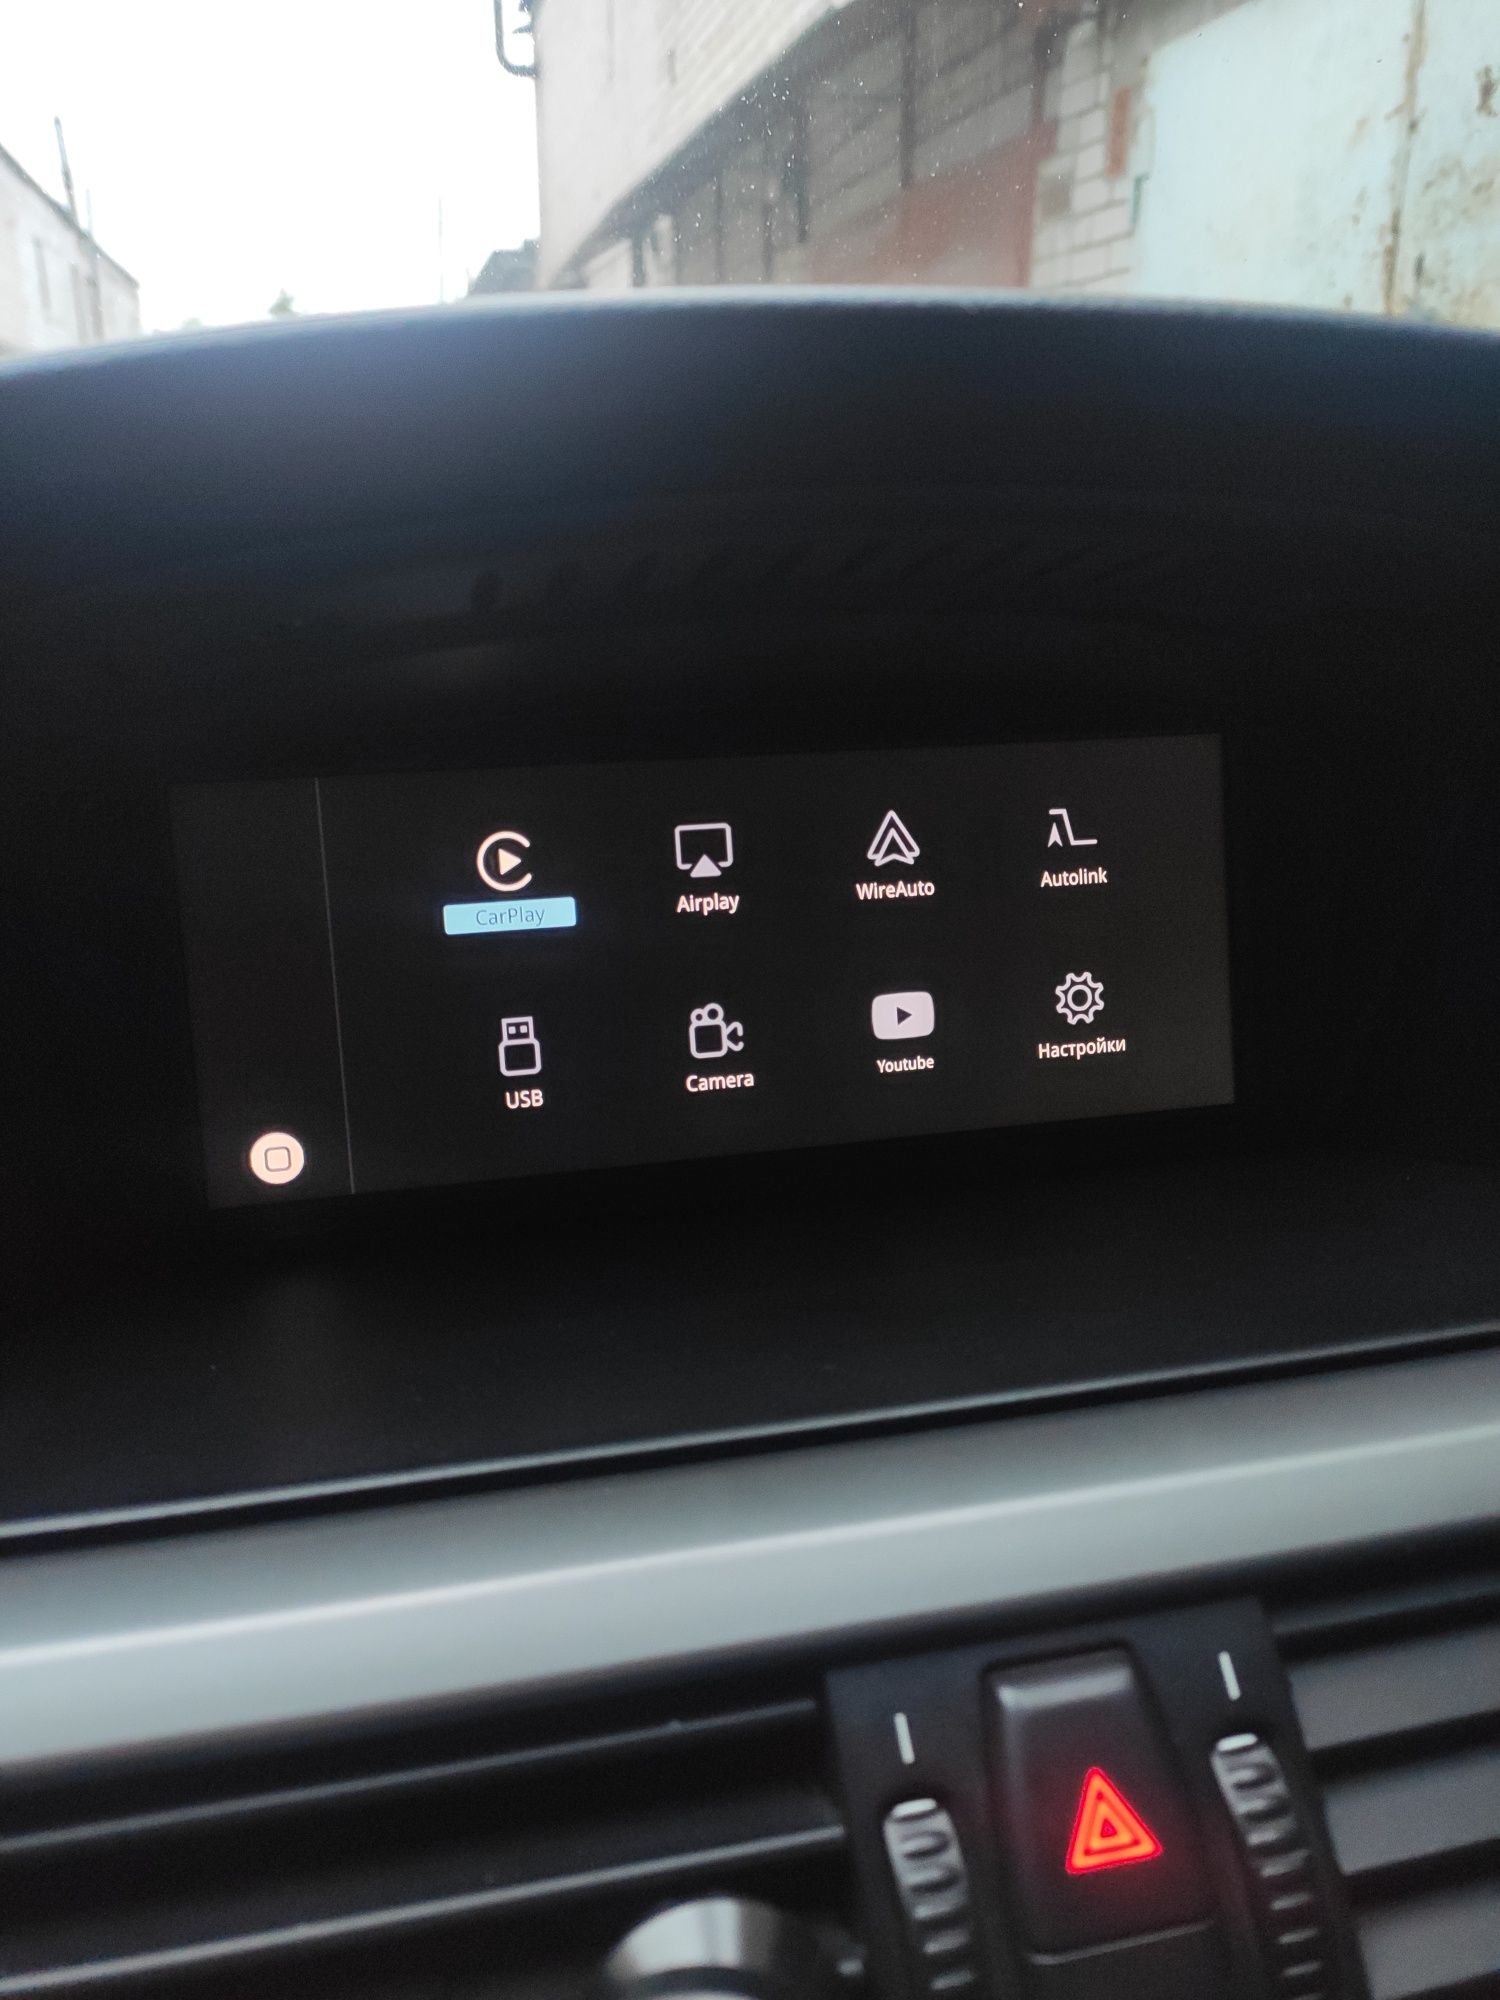 Блок Car play Android auto для Bmw CIC